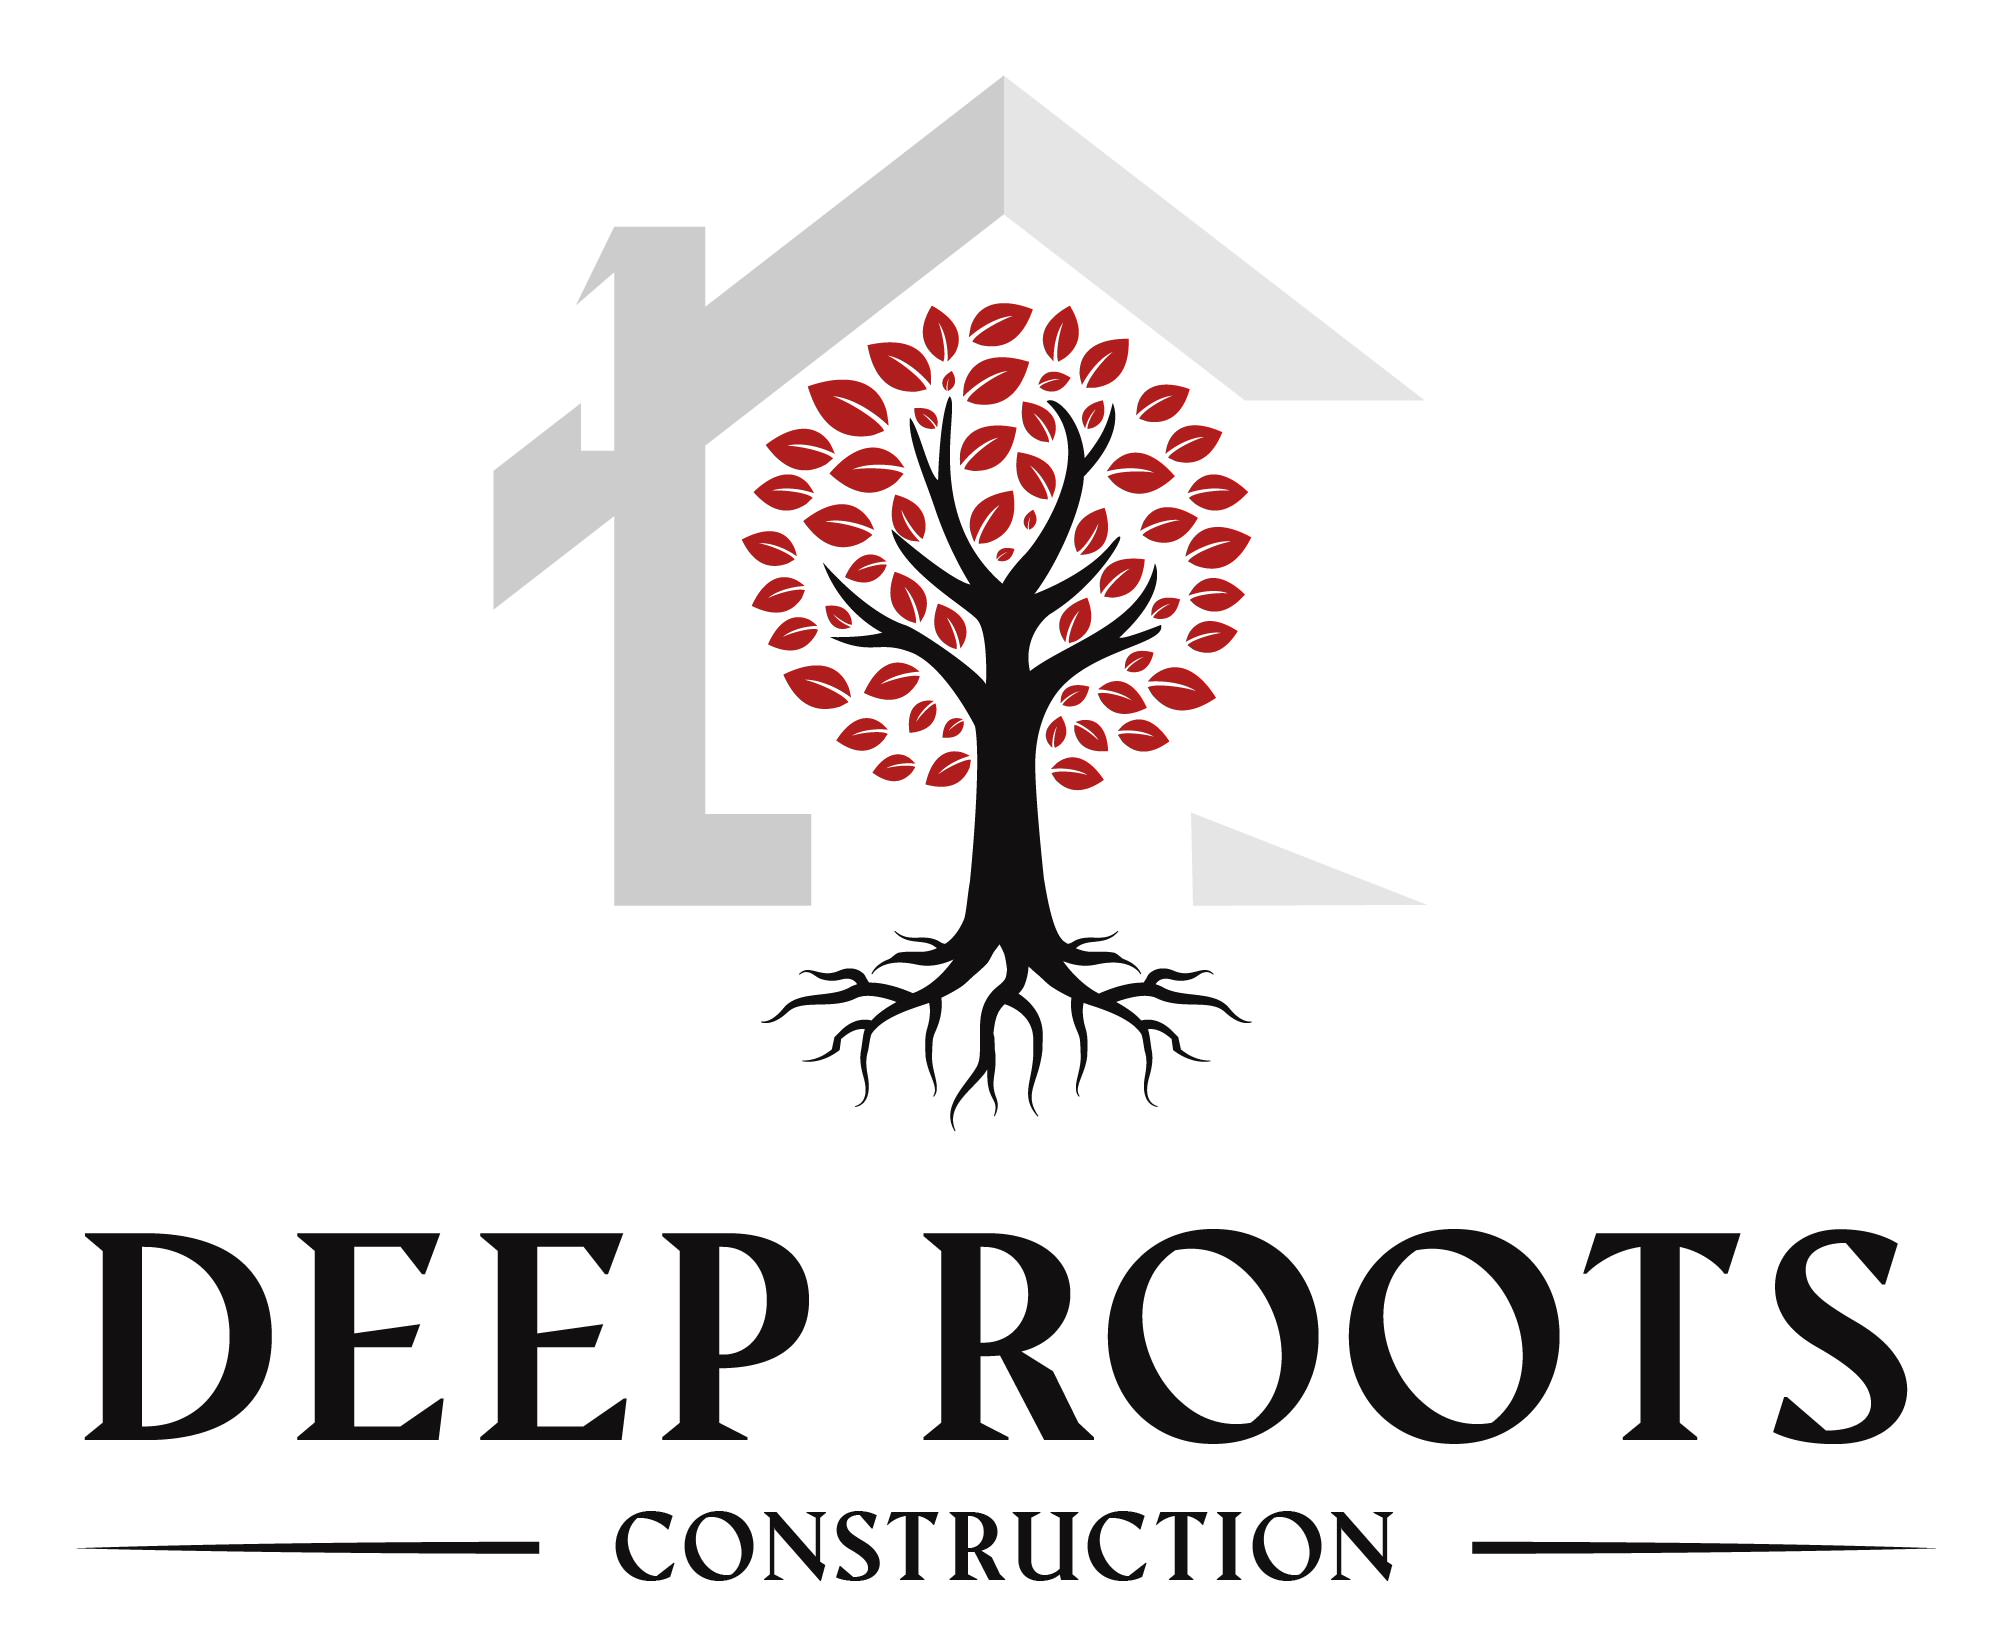 Deep roots construction